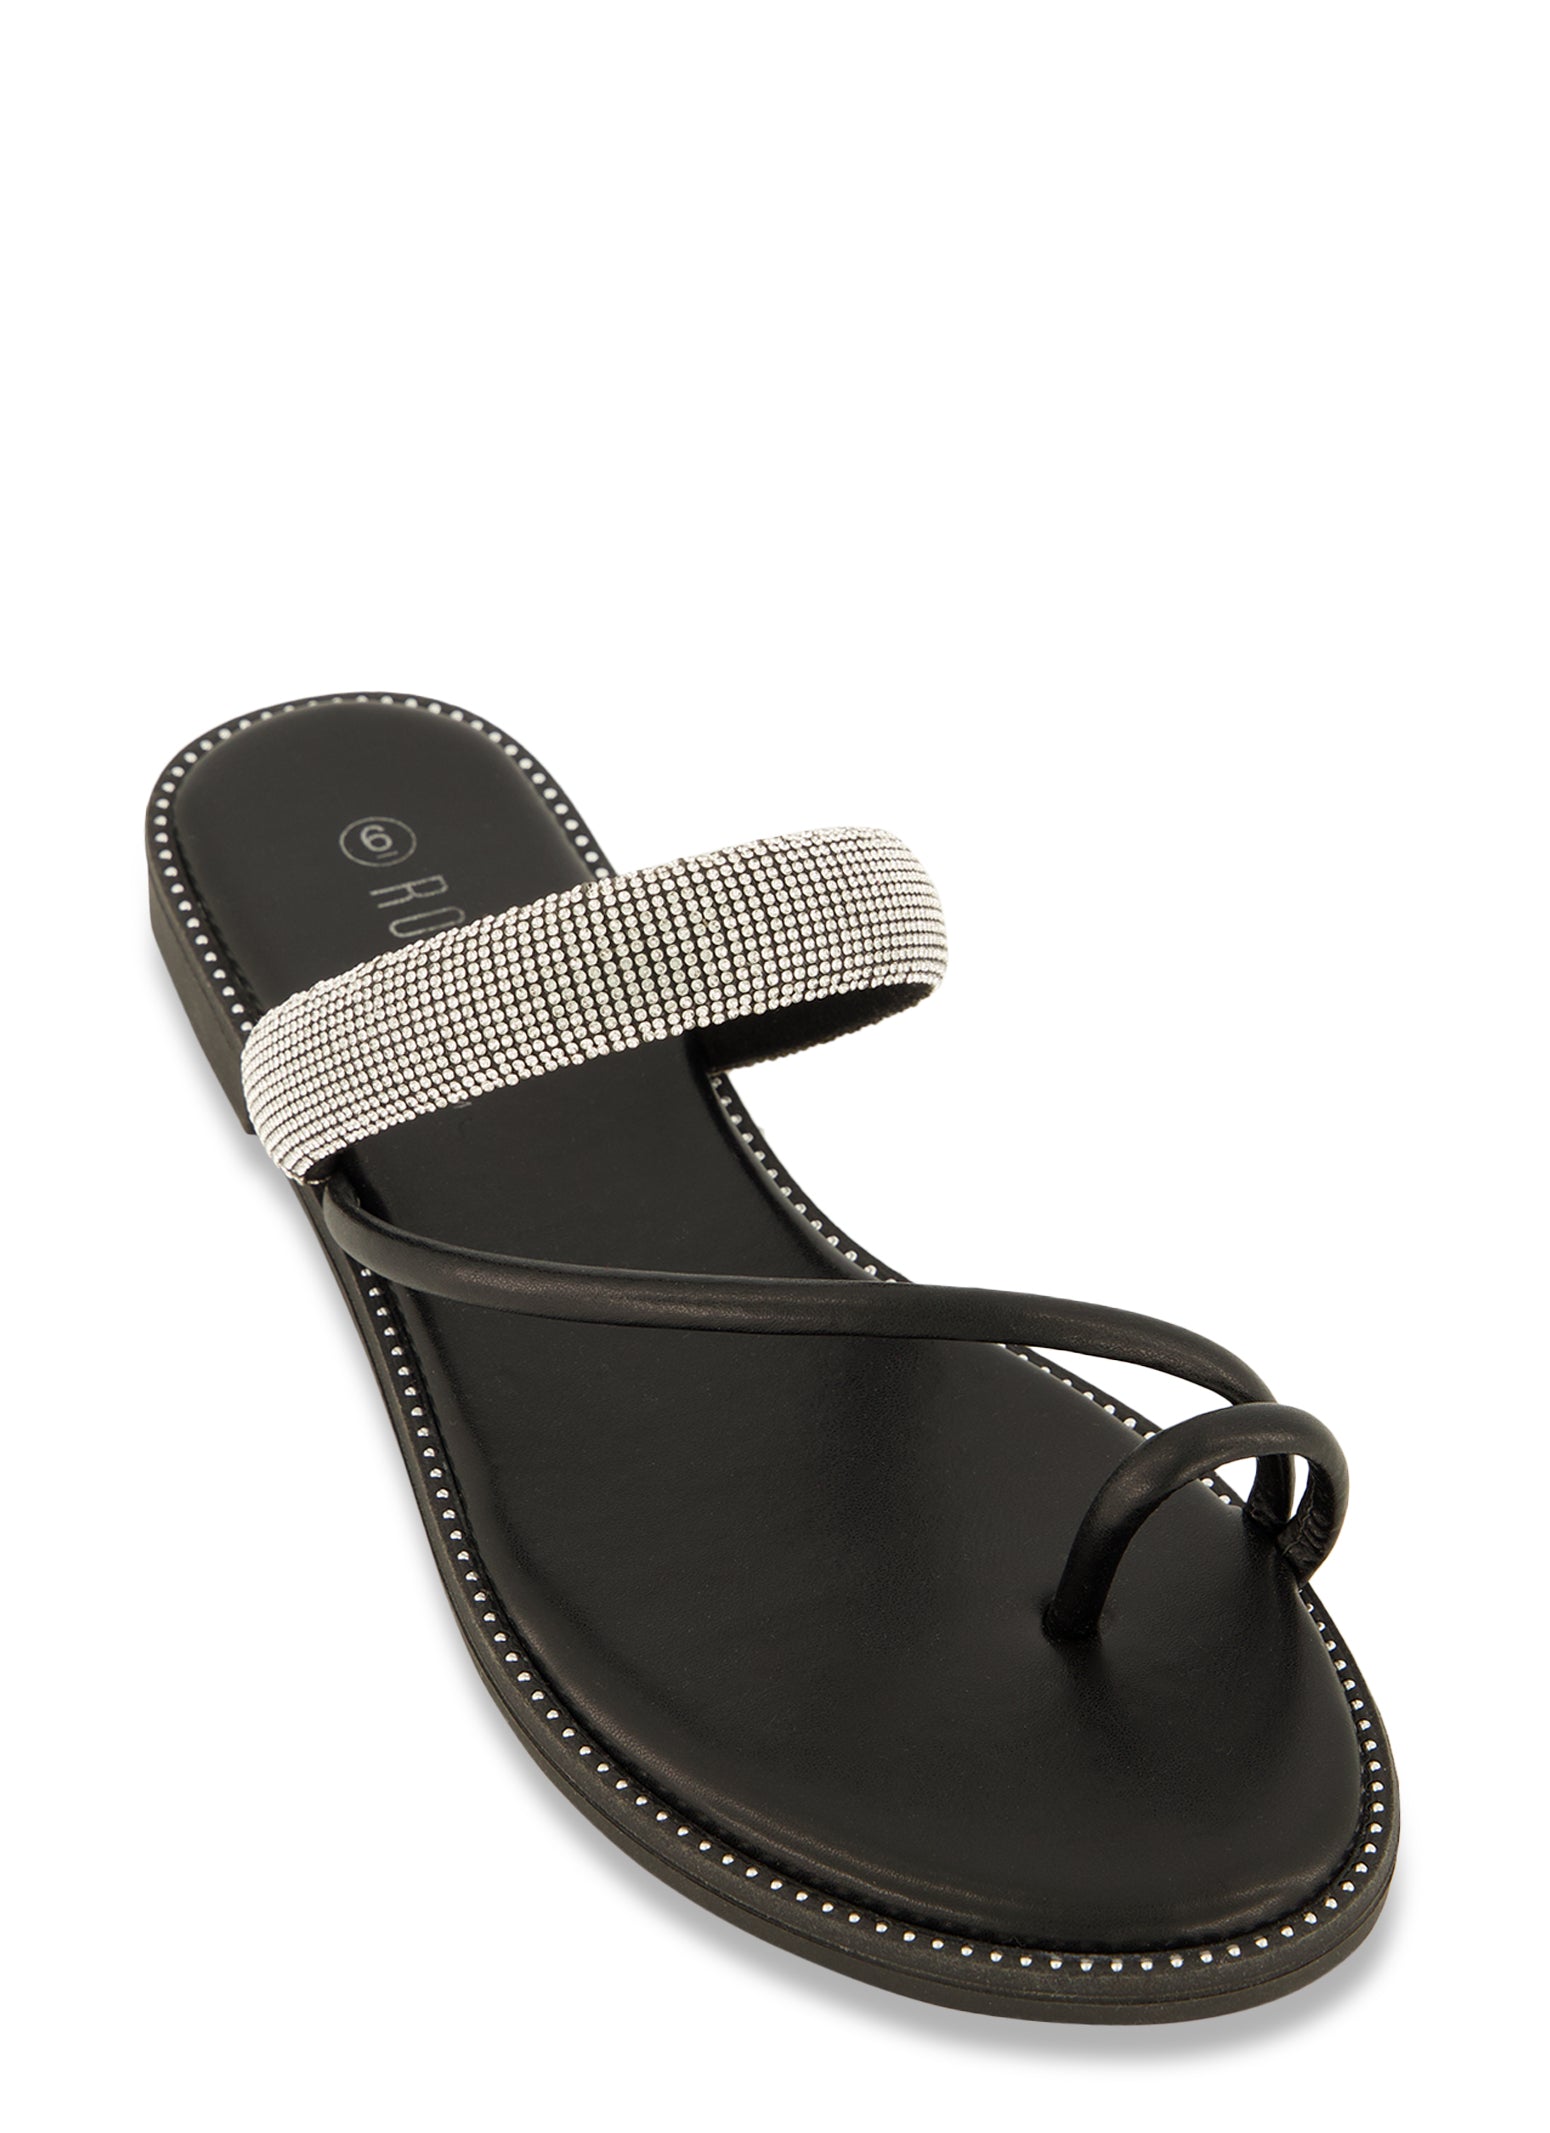 Womens Toe Loop Studded Rhinestone Band Slide Sandals, Black,